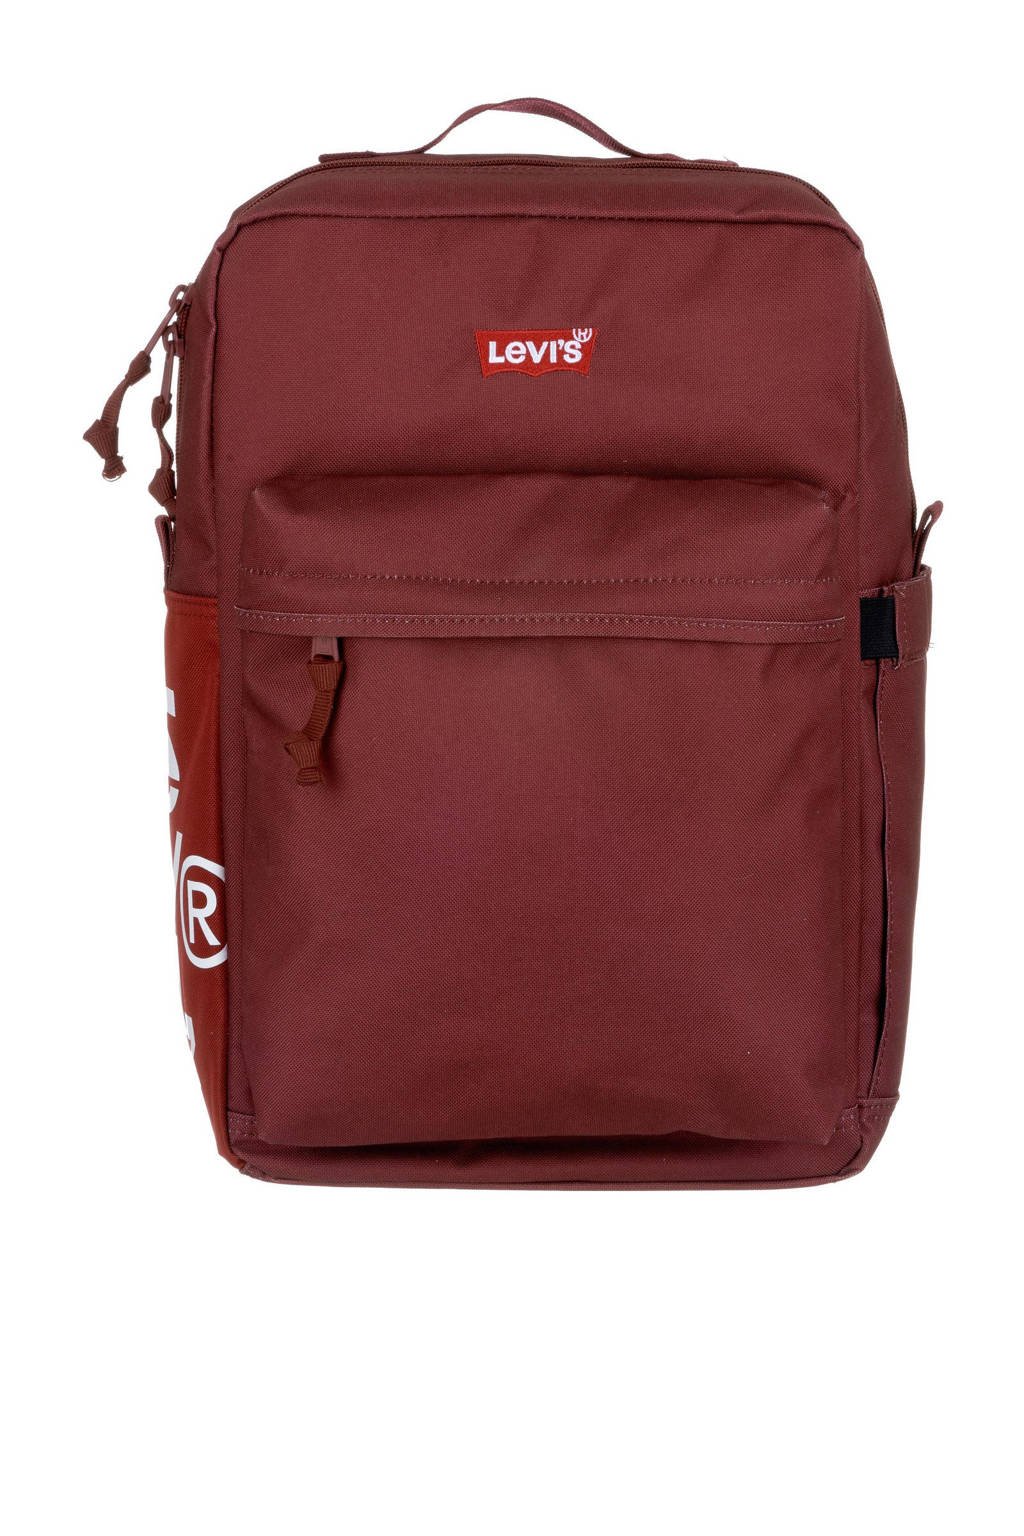 Levi's  rugzak met logo donkerrood